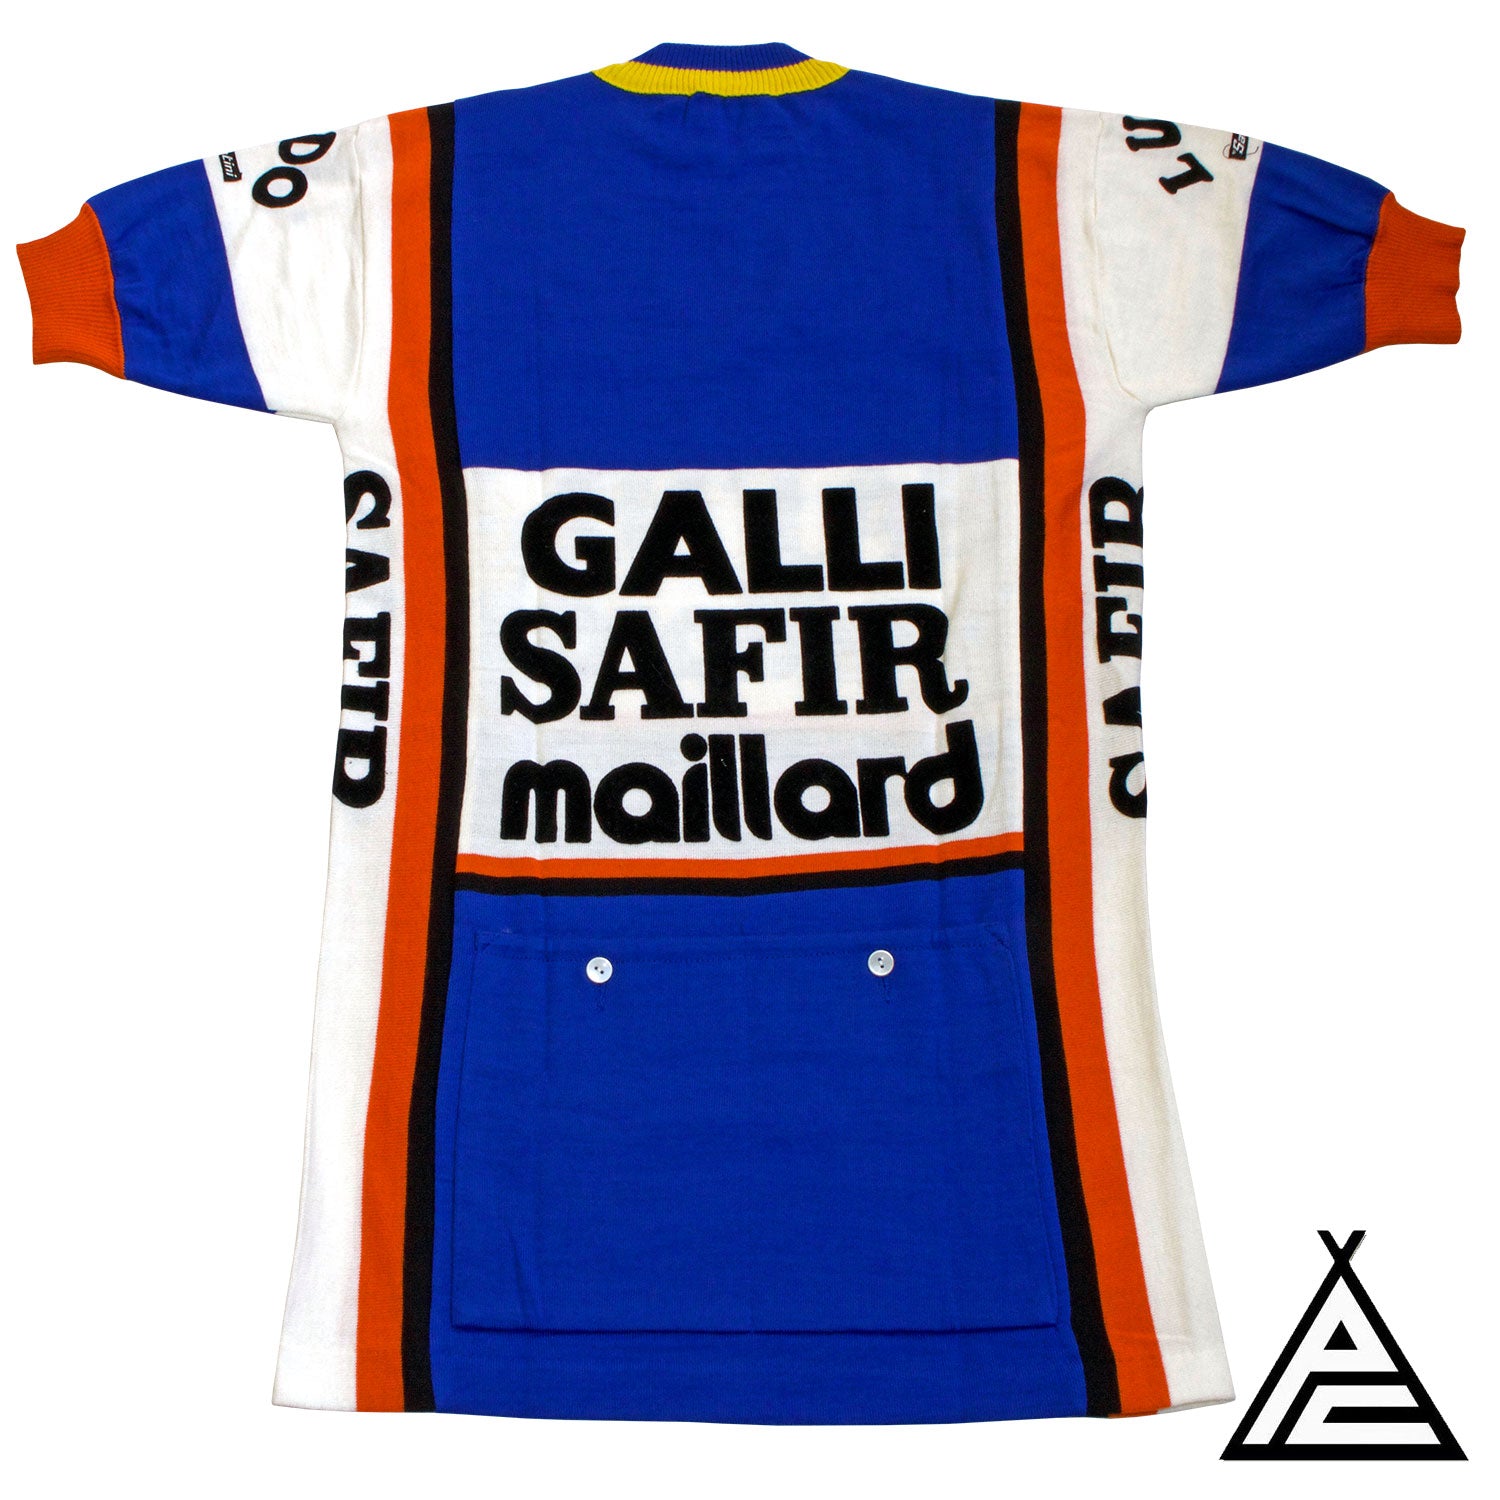 The back of the Safir Galli Maillard team jersey by Santini